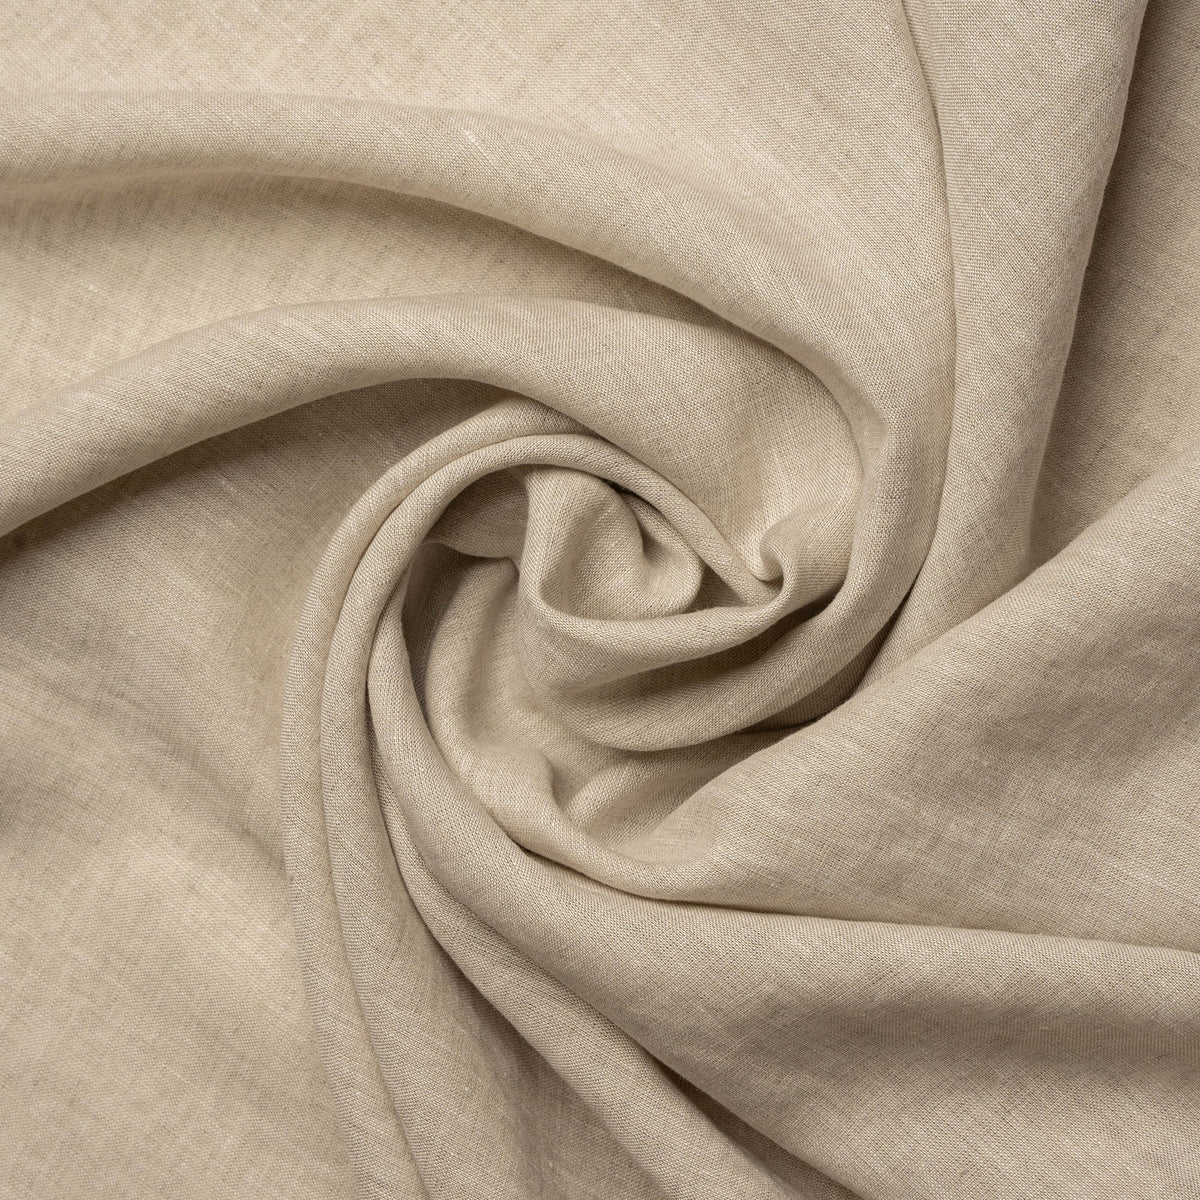 MENIQUE 100% Linen Blanket